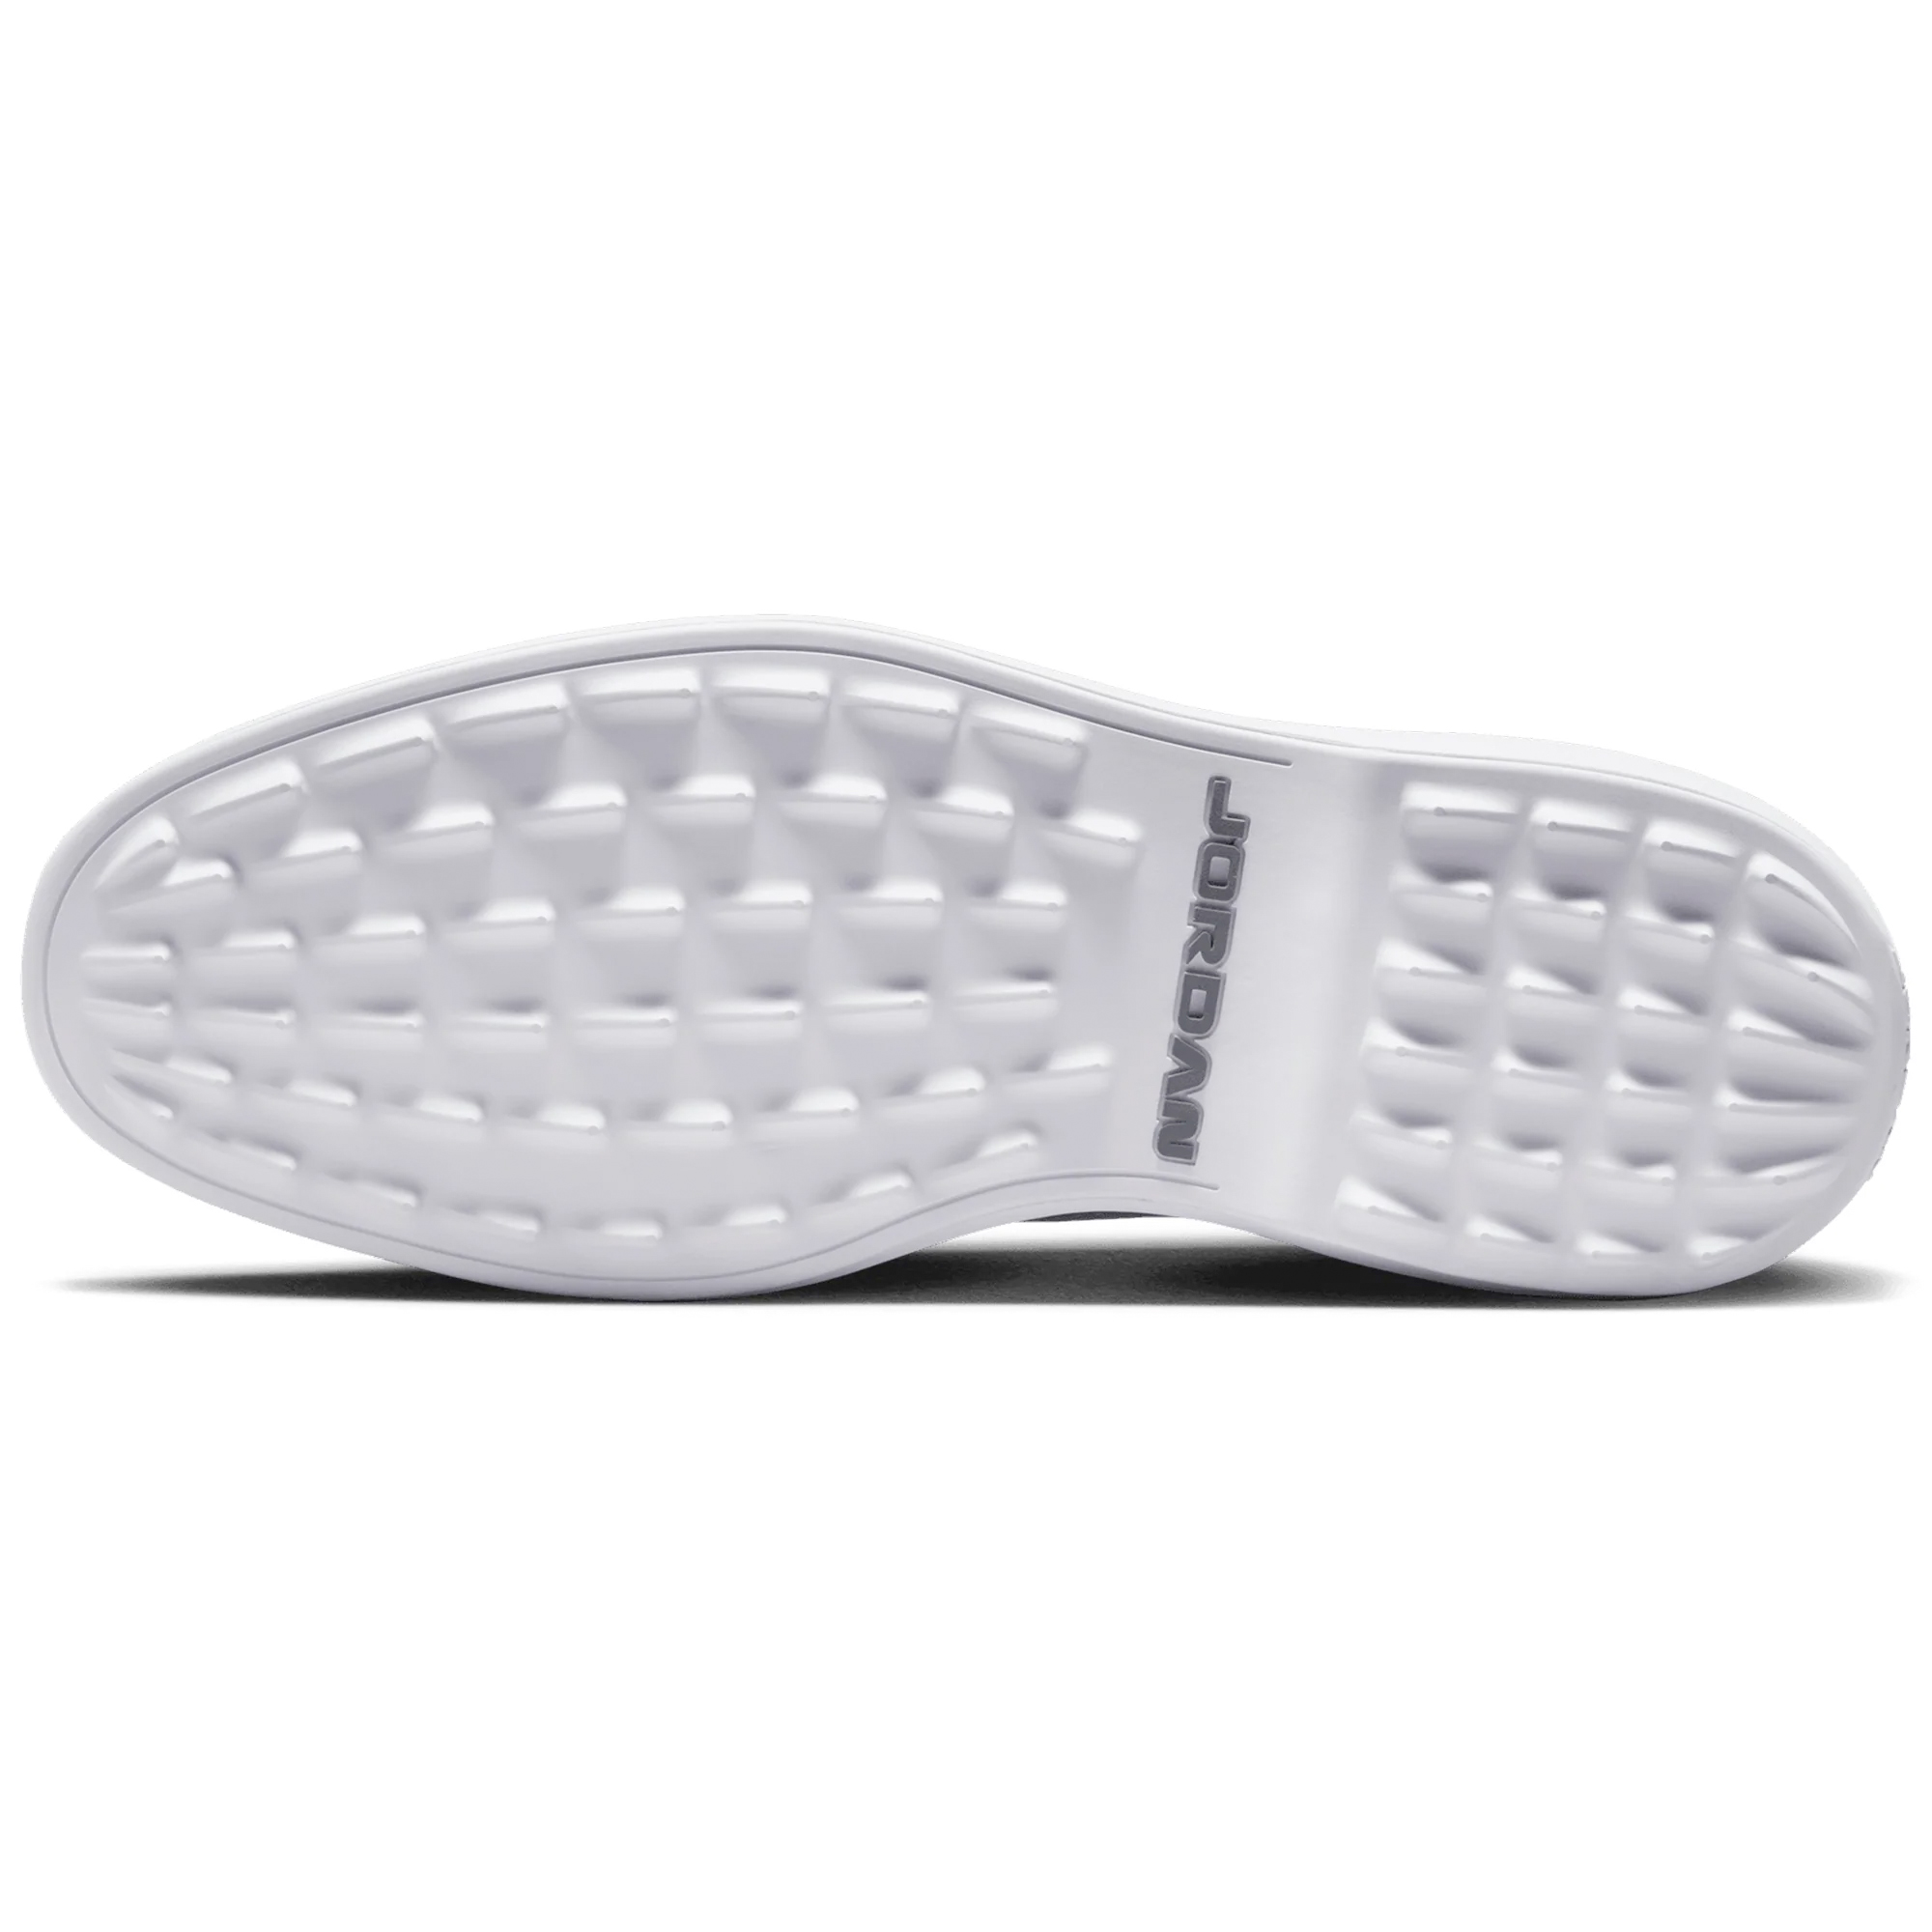 Nike Golf Air Jordan ADG 4 Spikeless Golf Shoes  - Wolf Grey/White/Smoke Grey